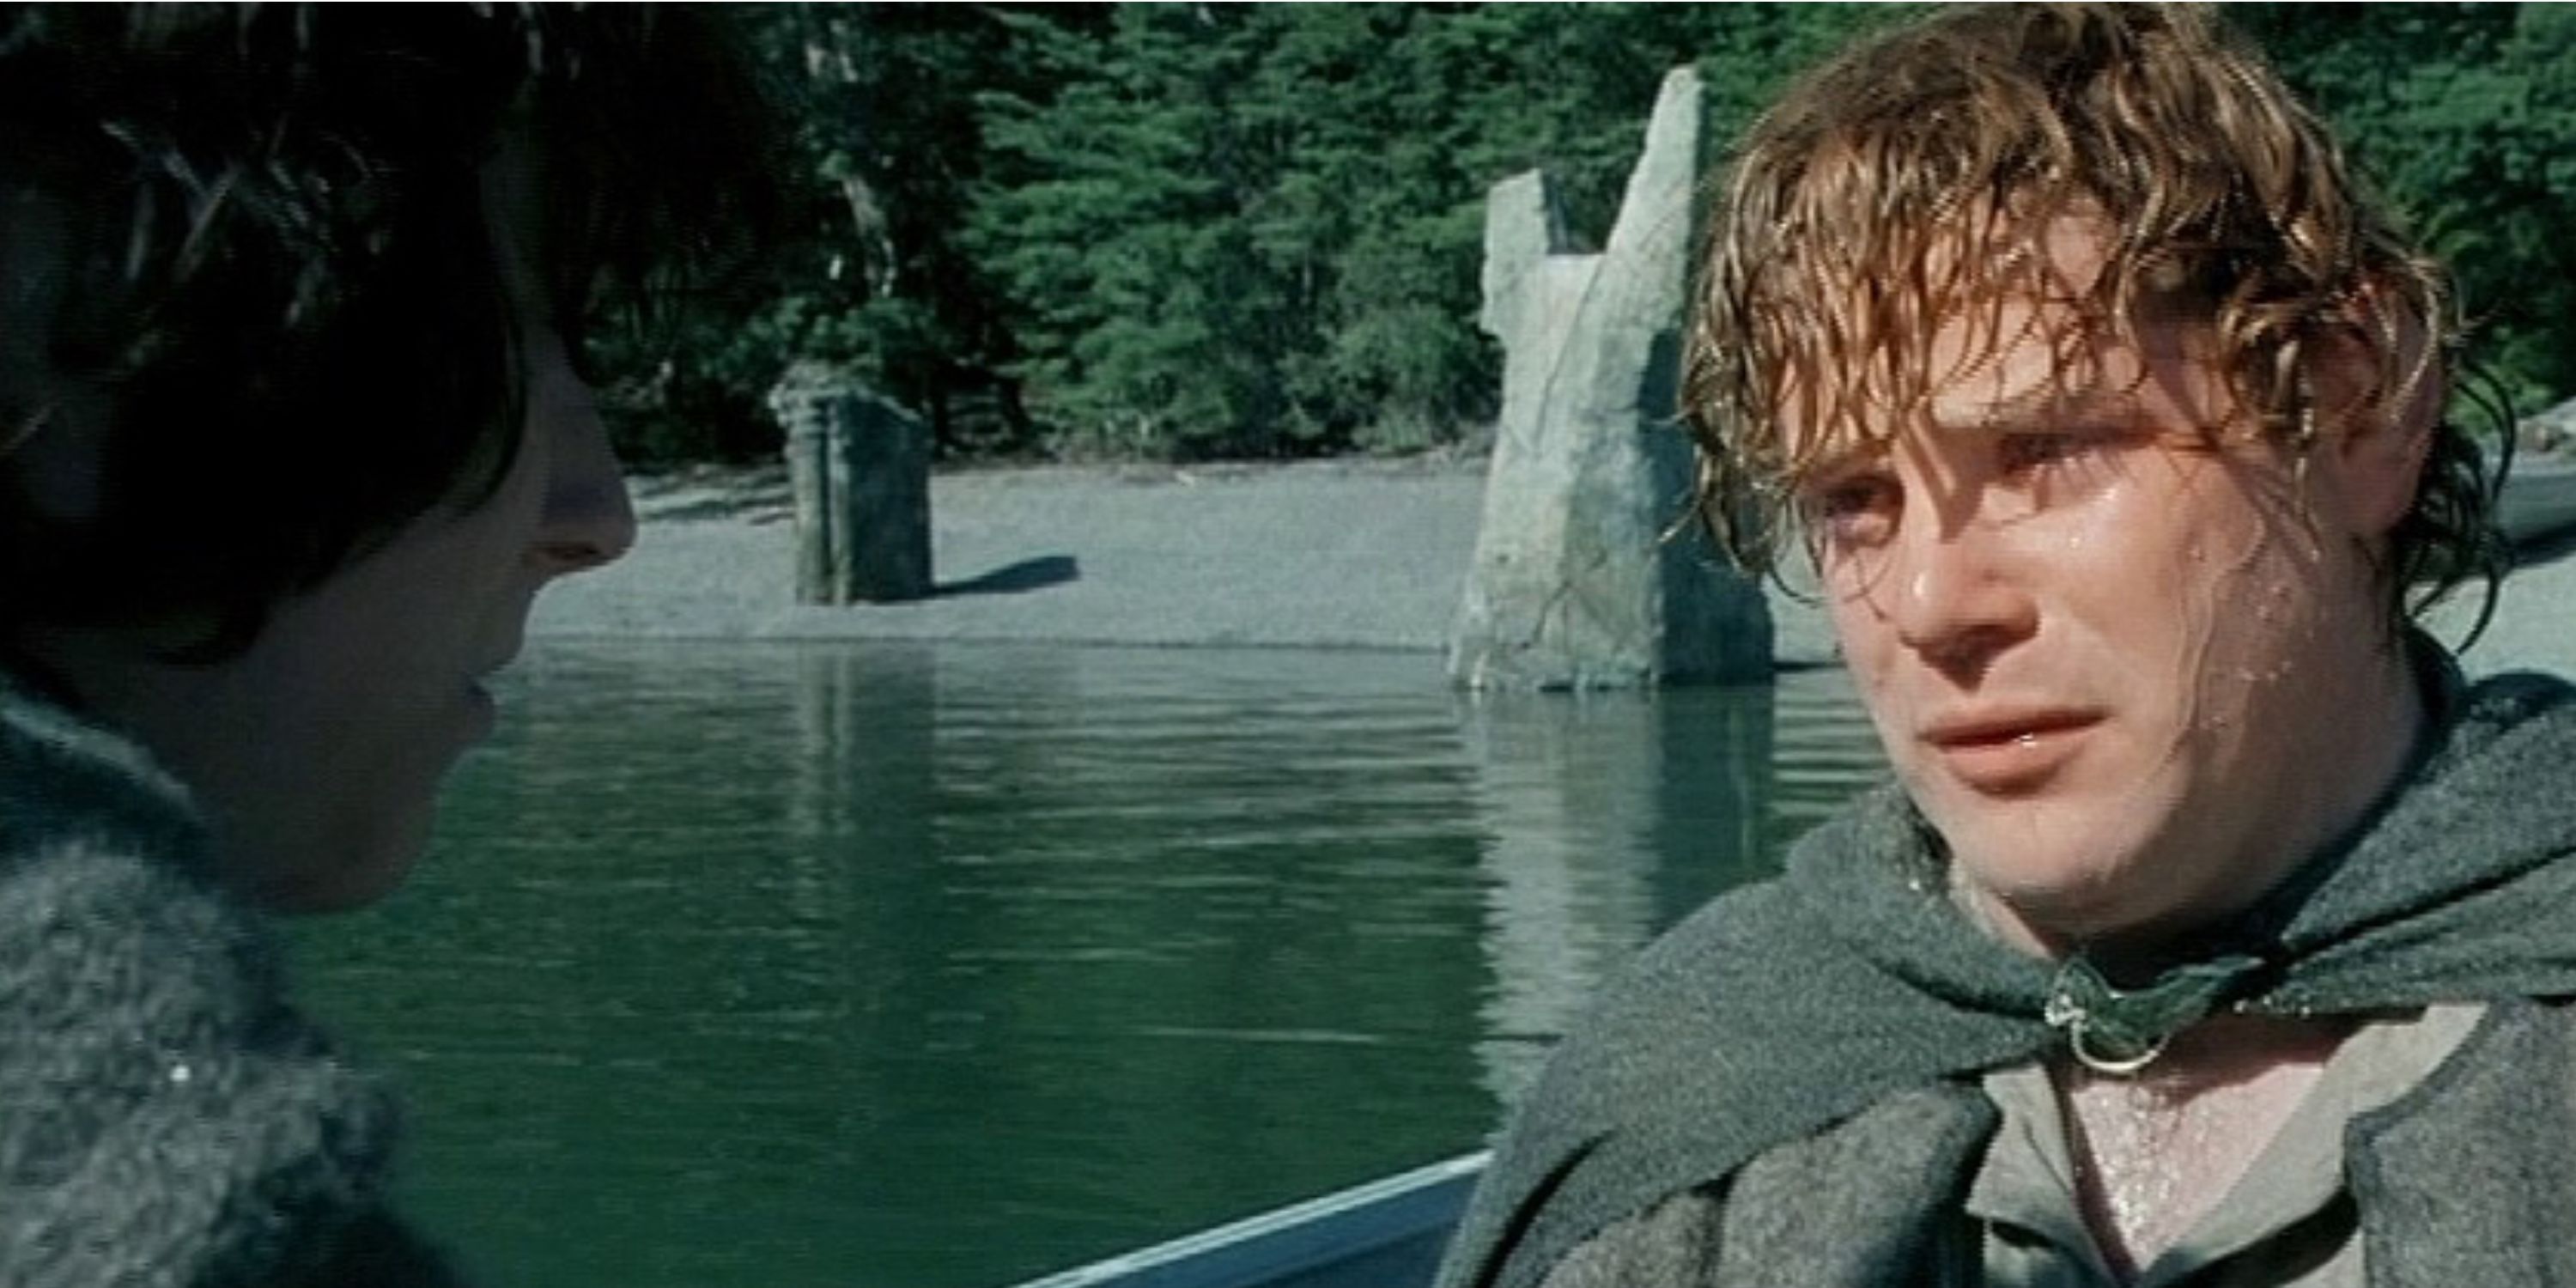 Сэм в лодке с Фродо после того, как он последовал за ним в Мордор